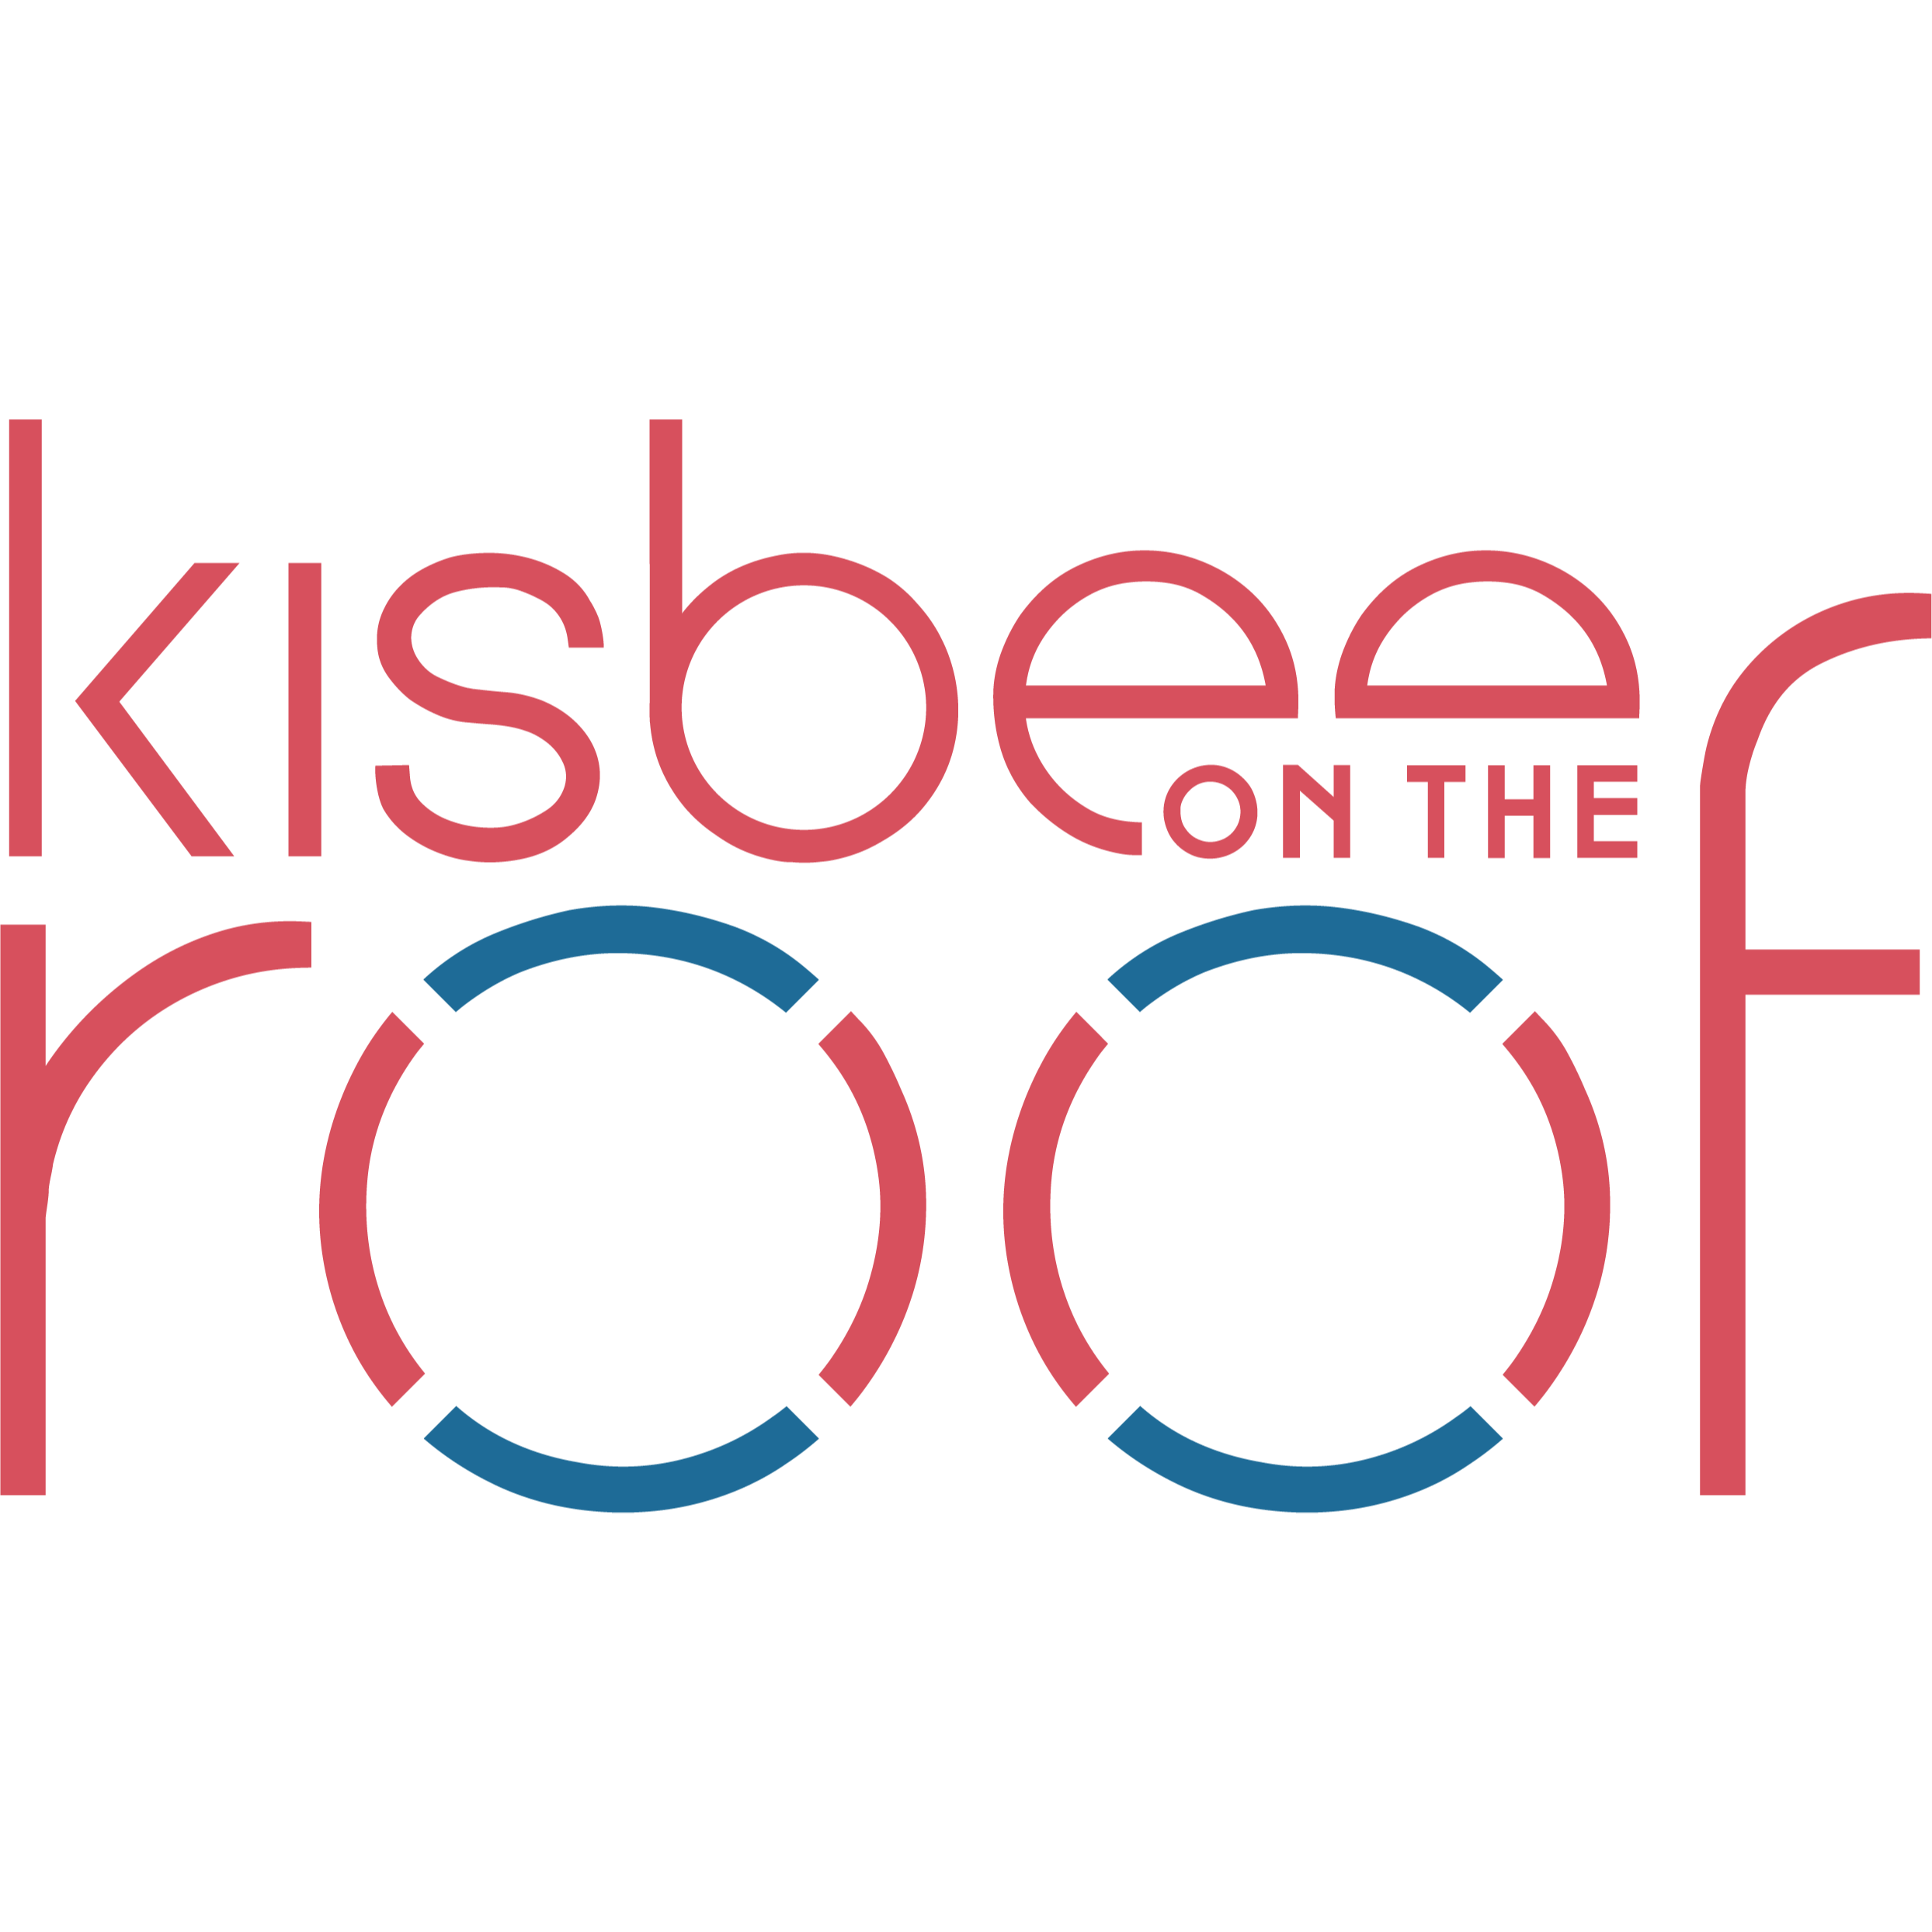 Kisbee on the Roof